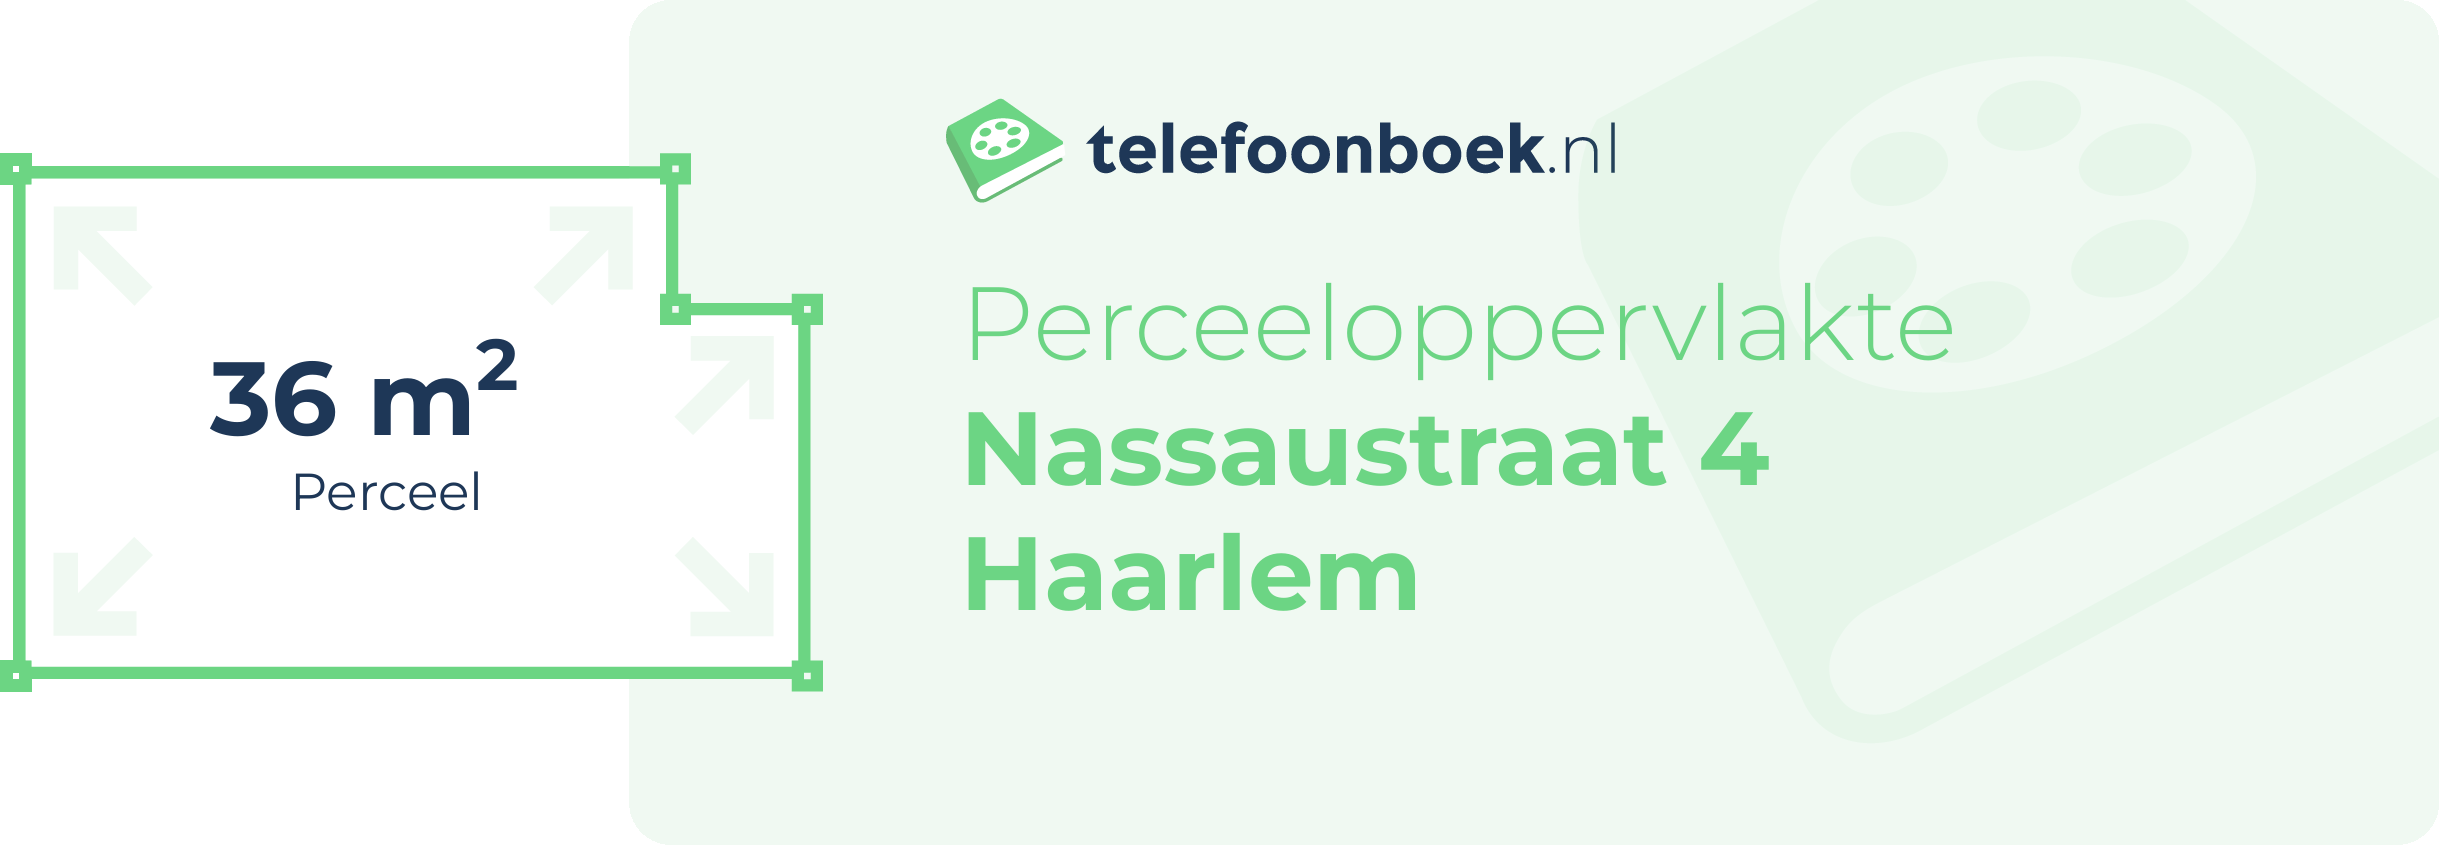 Perceeloppervlakte Nassaustraat 4 Haarlem